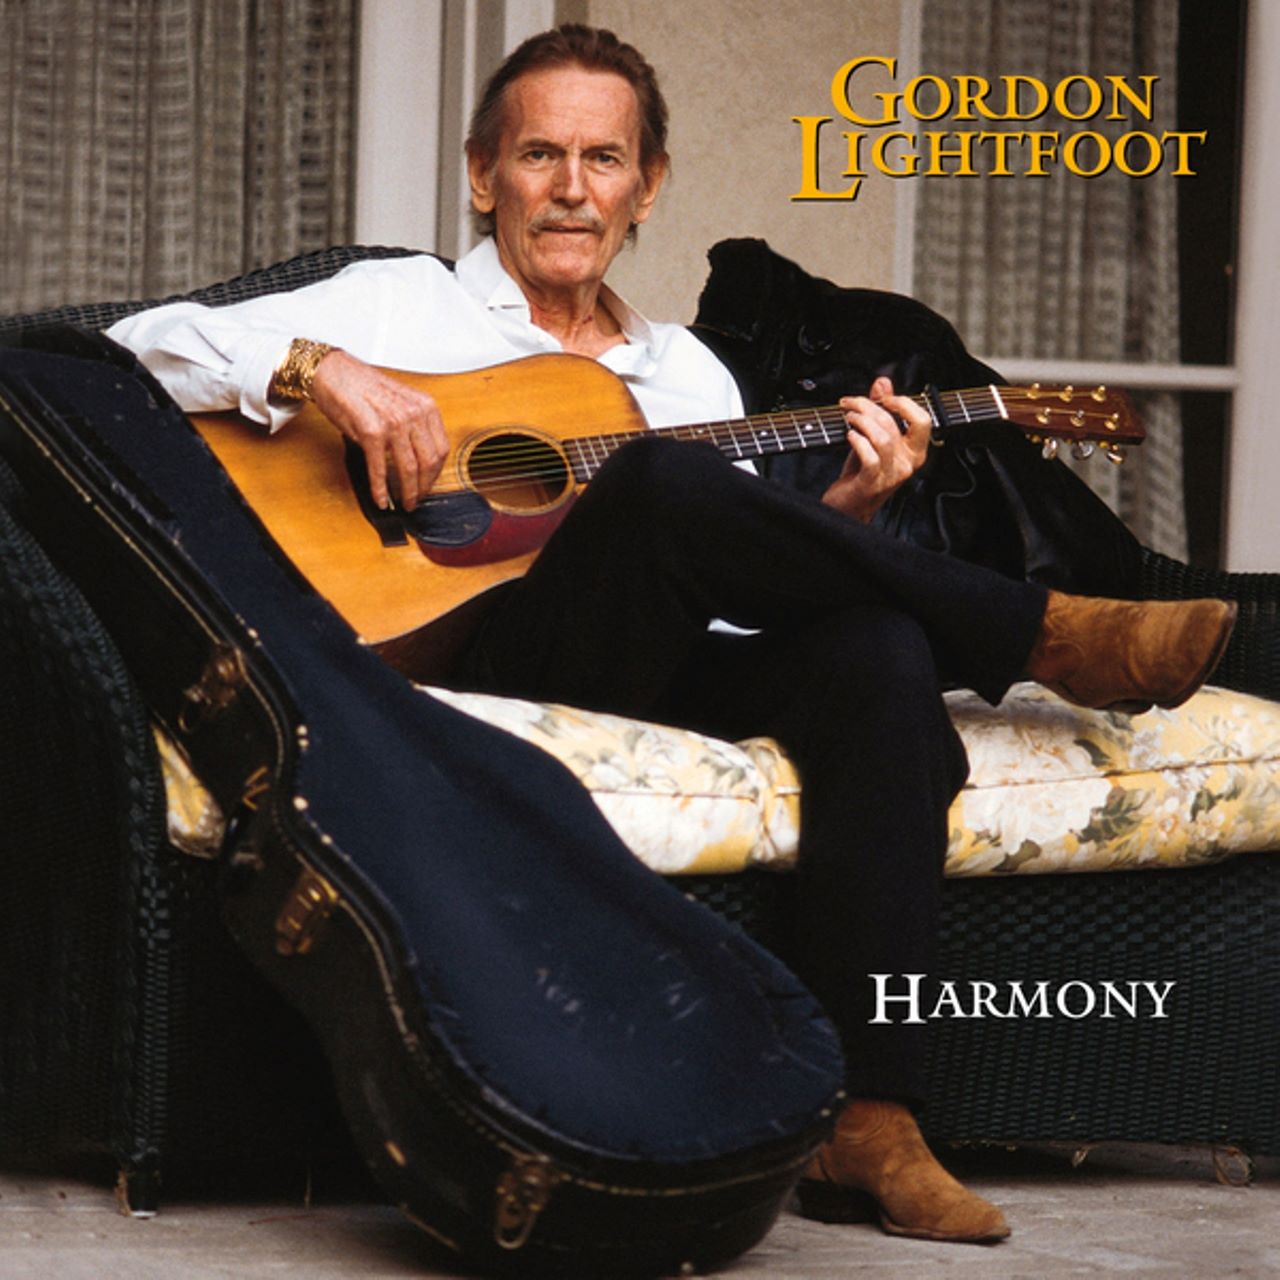 Gordon Lightfoot - Harmony cover album